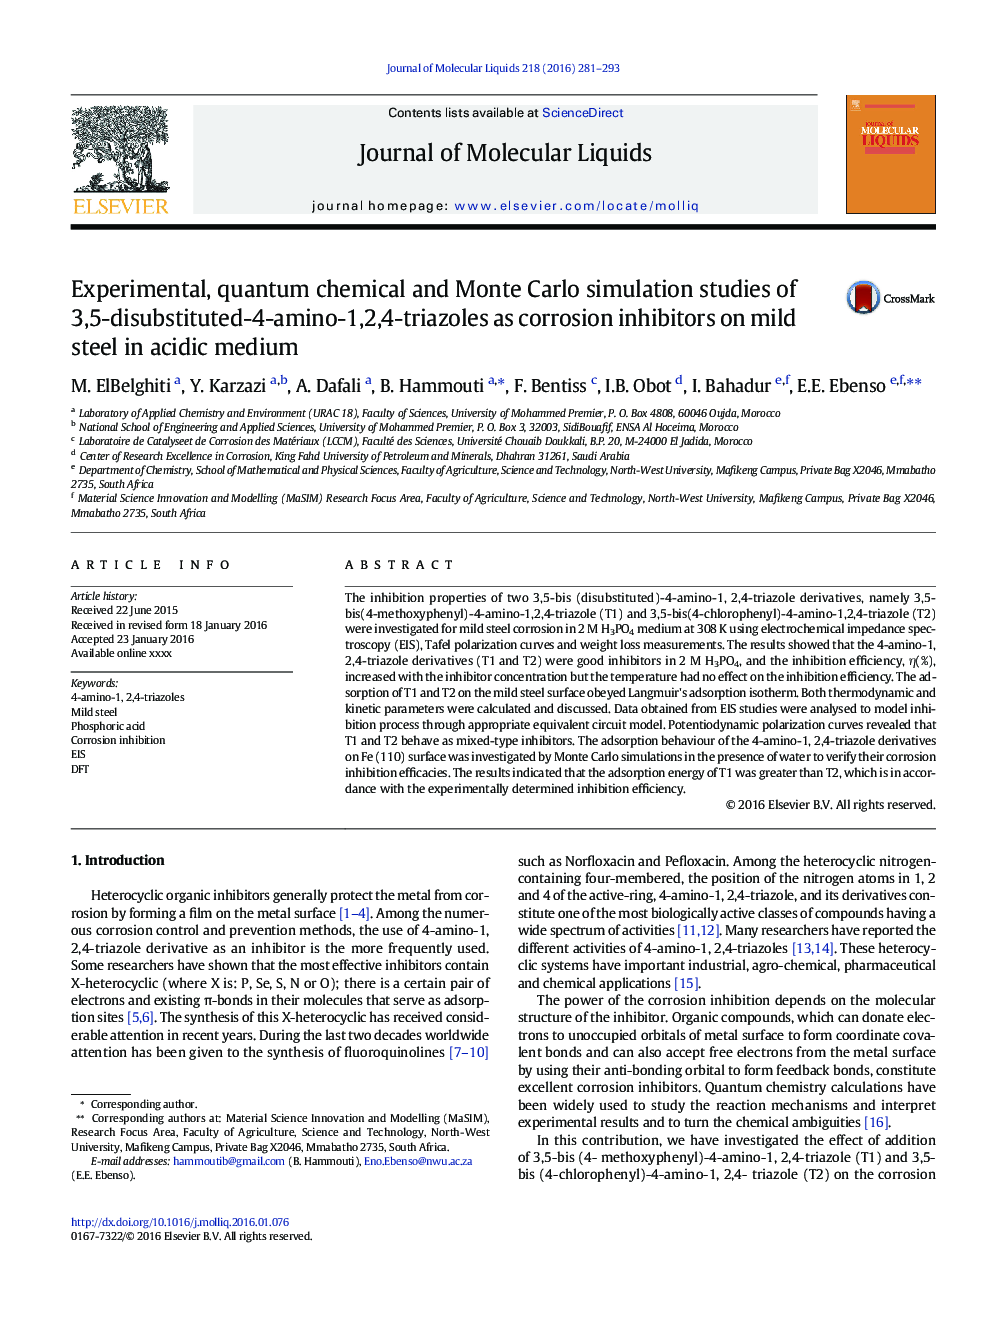 Experimental, quantum chemical and Monte Carlo simulation studies of 3,5-disubstituted-4-amino-1,2,4-triazoles as corrosion inhibitors on mild steel in acidic medium